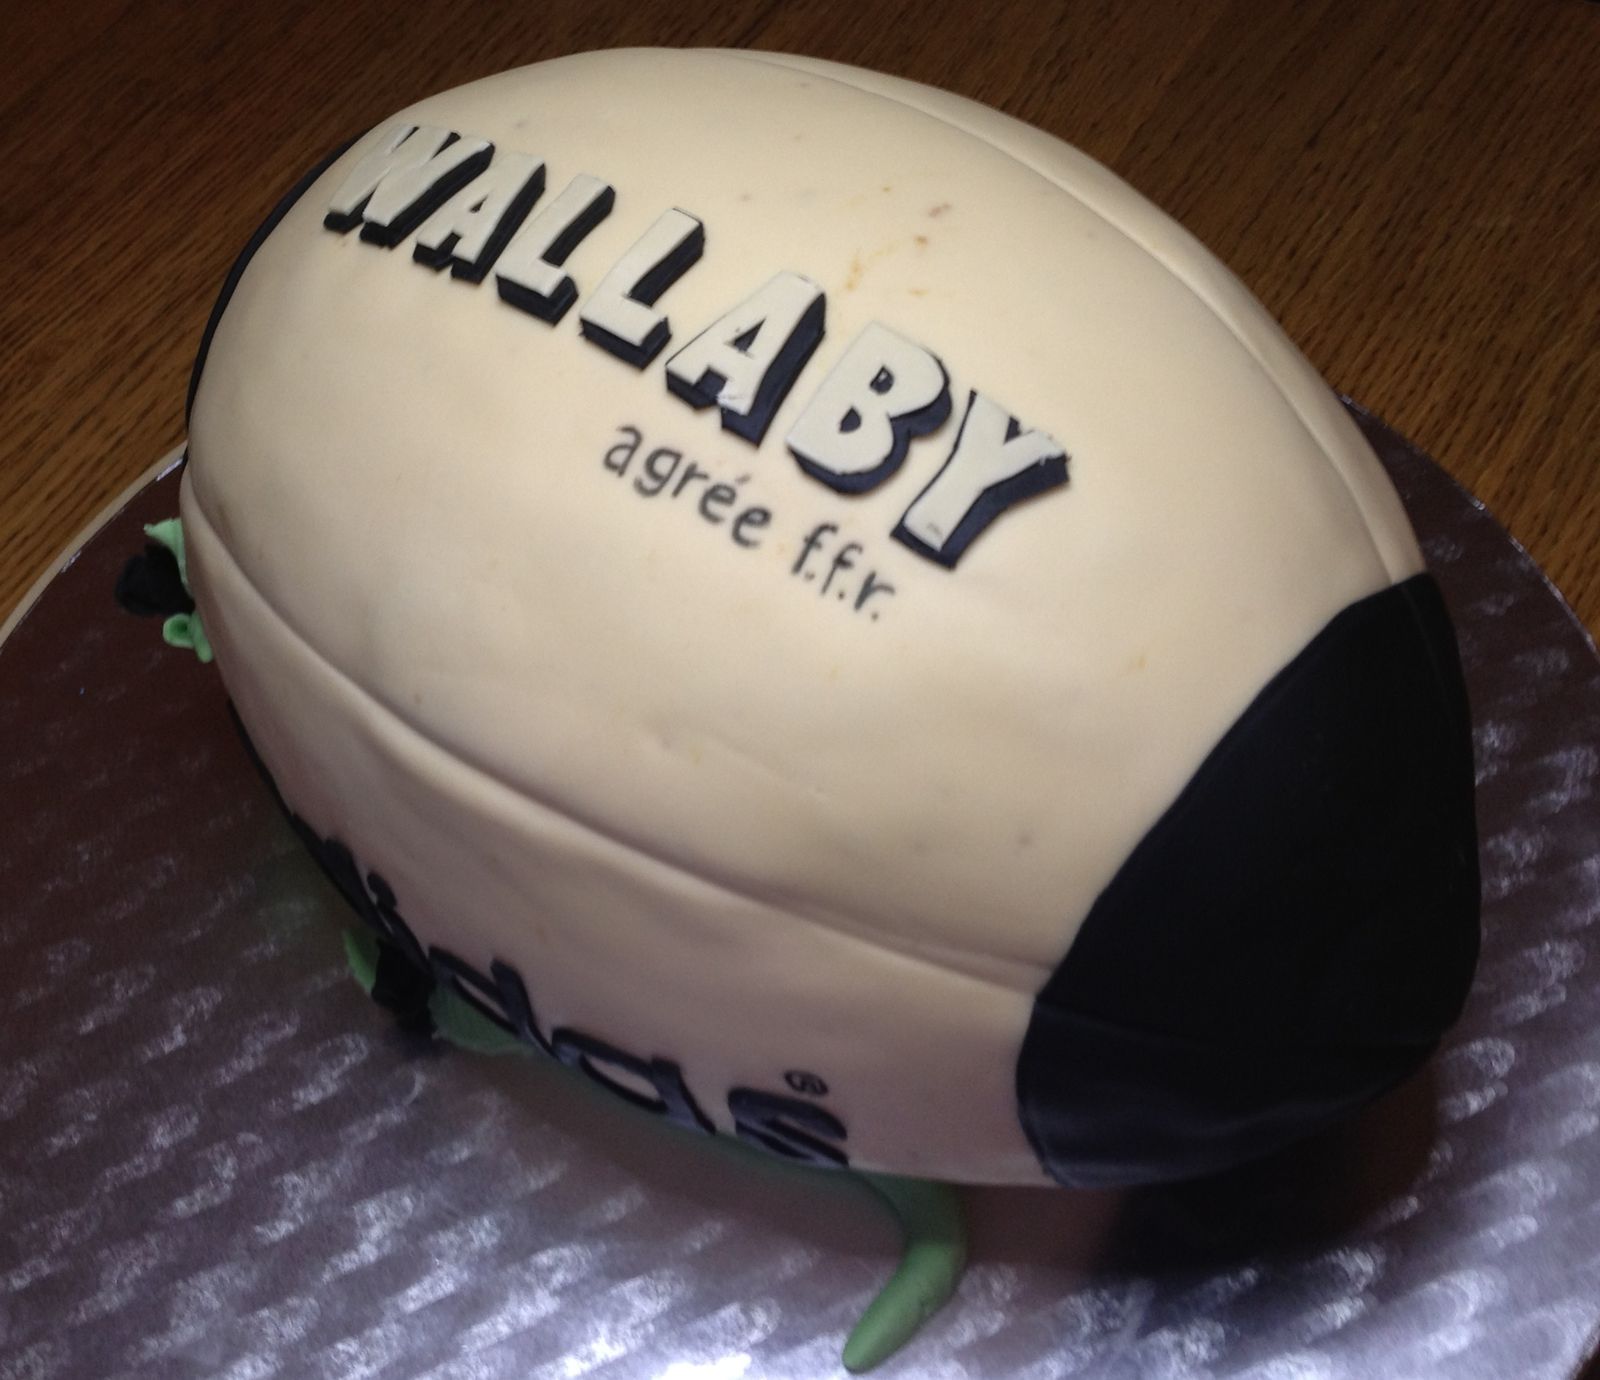 G Cake Joe Ballon de Rugby - gcakefactory.com